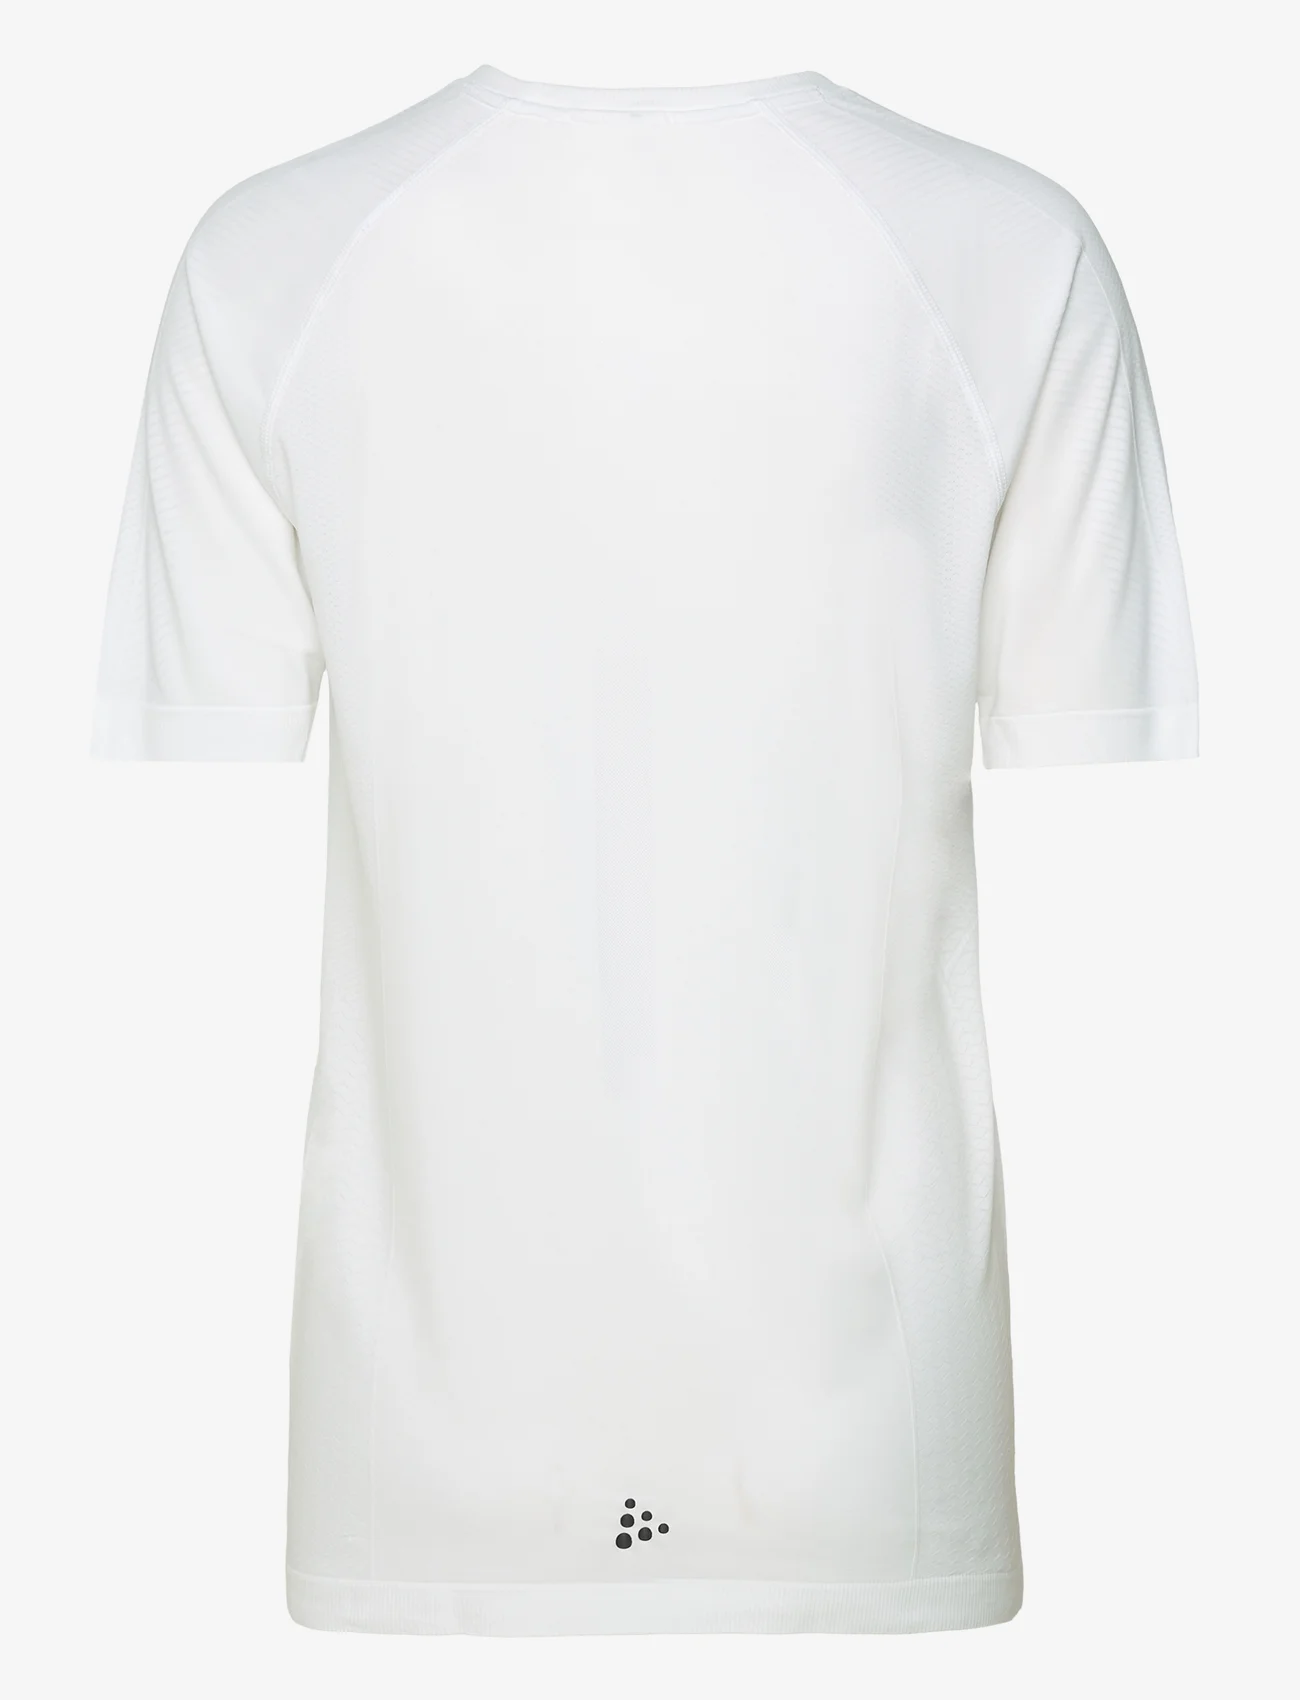 Craft - Adv Cool Intensity SS W - t-shirts - white - 1